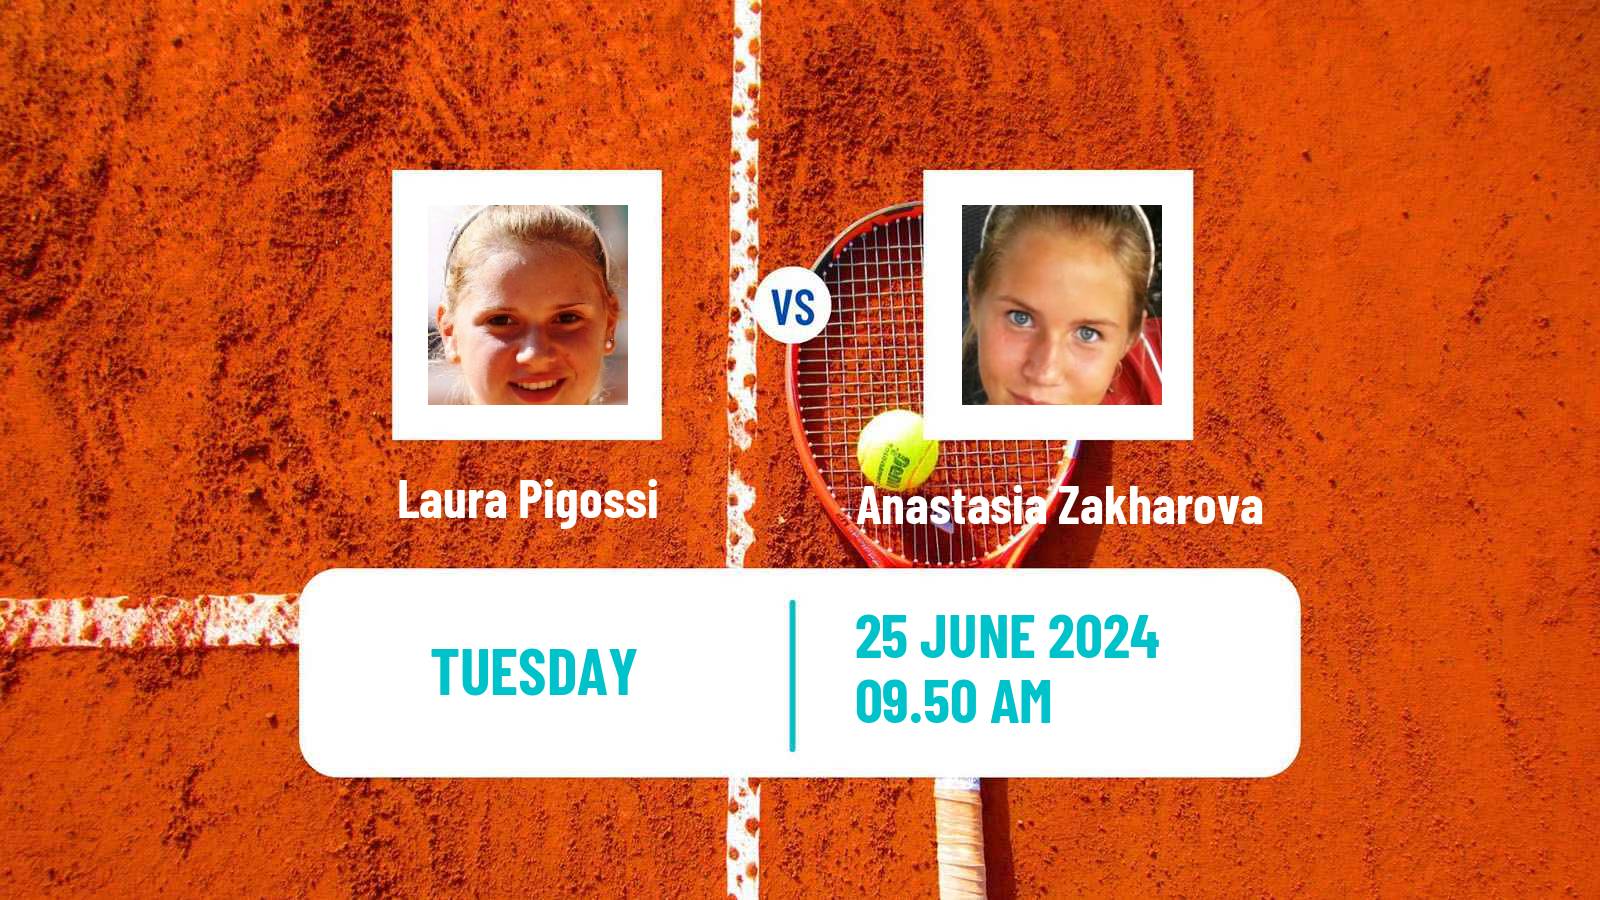 Tennis WTA Wimbledon Laura Pigossi - Anastasia Zakharova